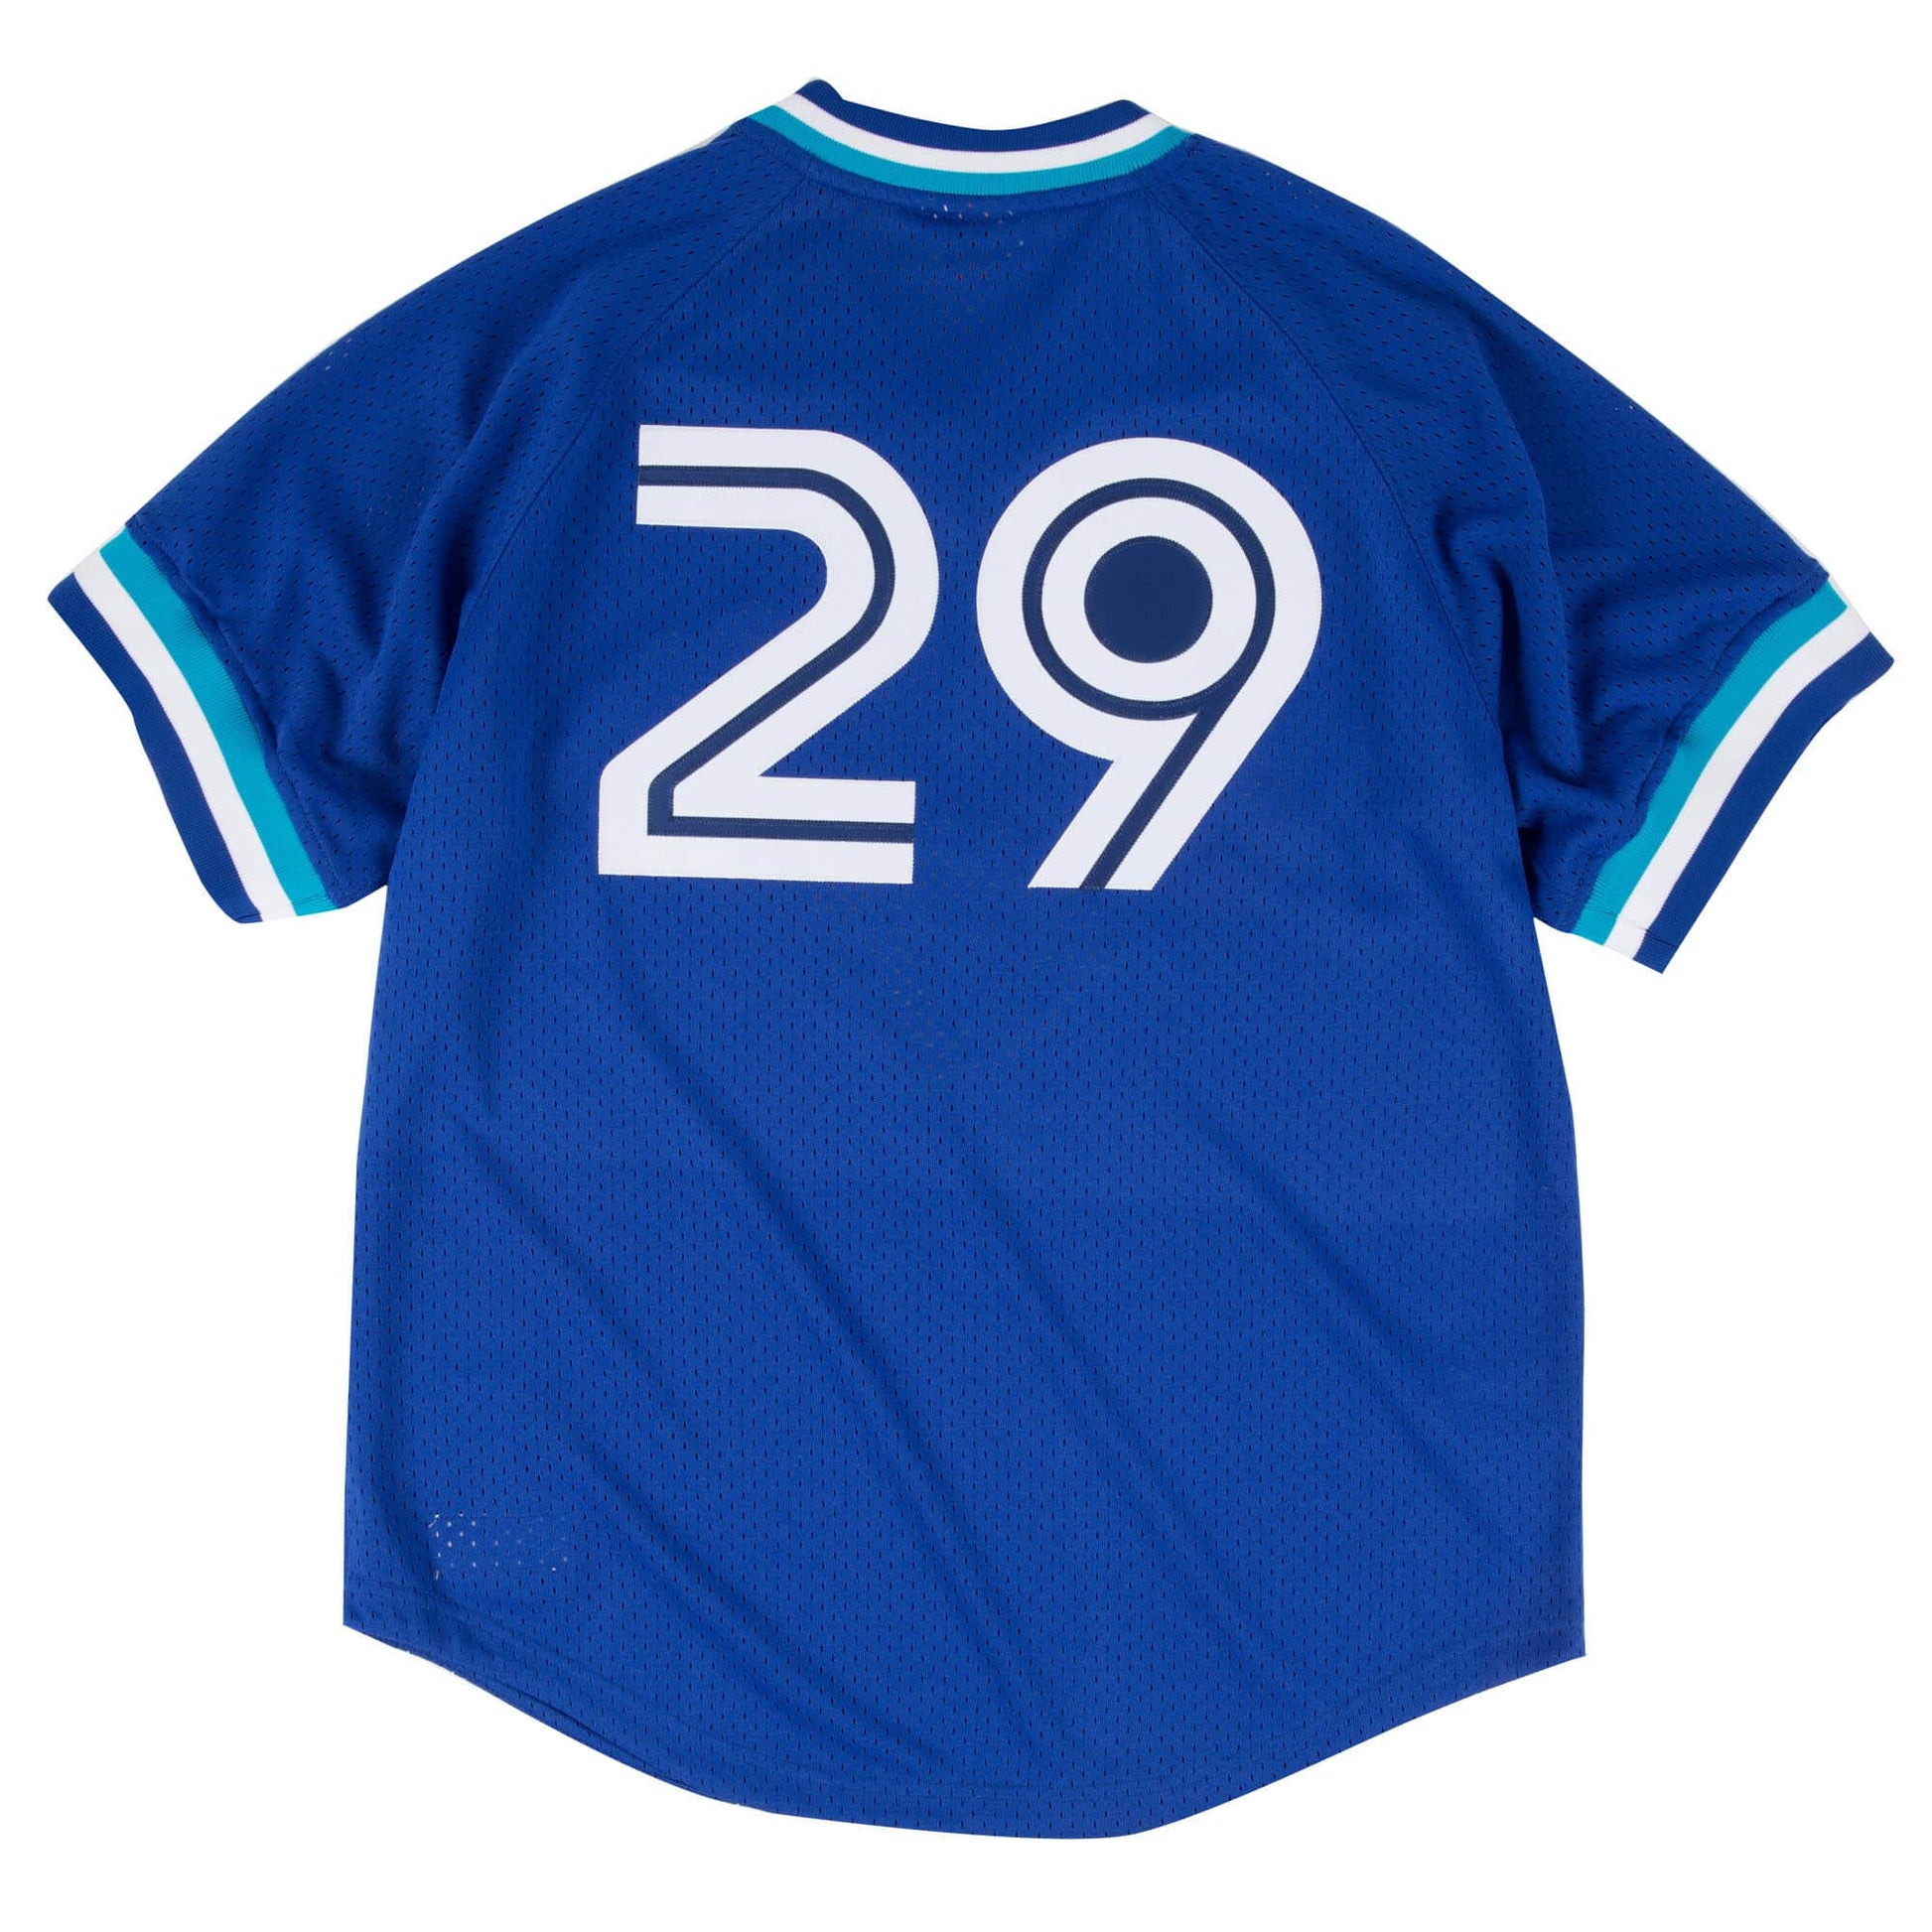 BP Jersey Toronto Blue Jays 1993 Joe Carter #29 - Broski Clothing